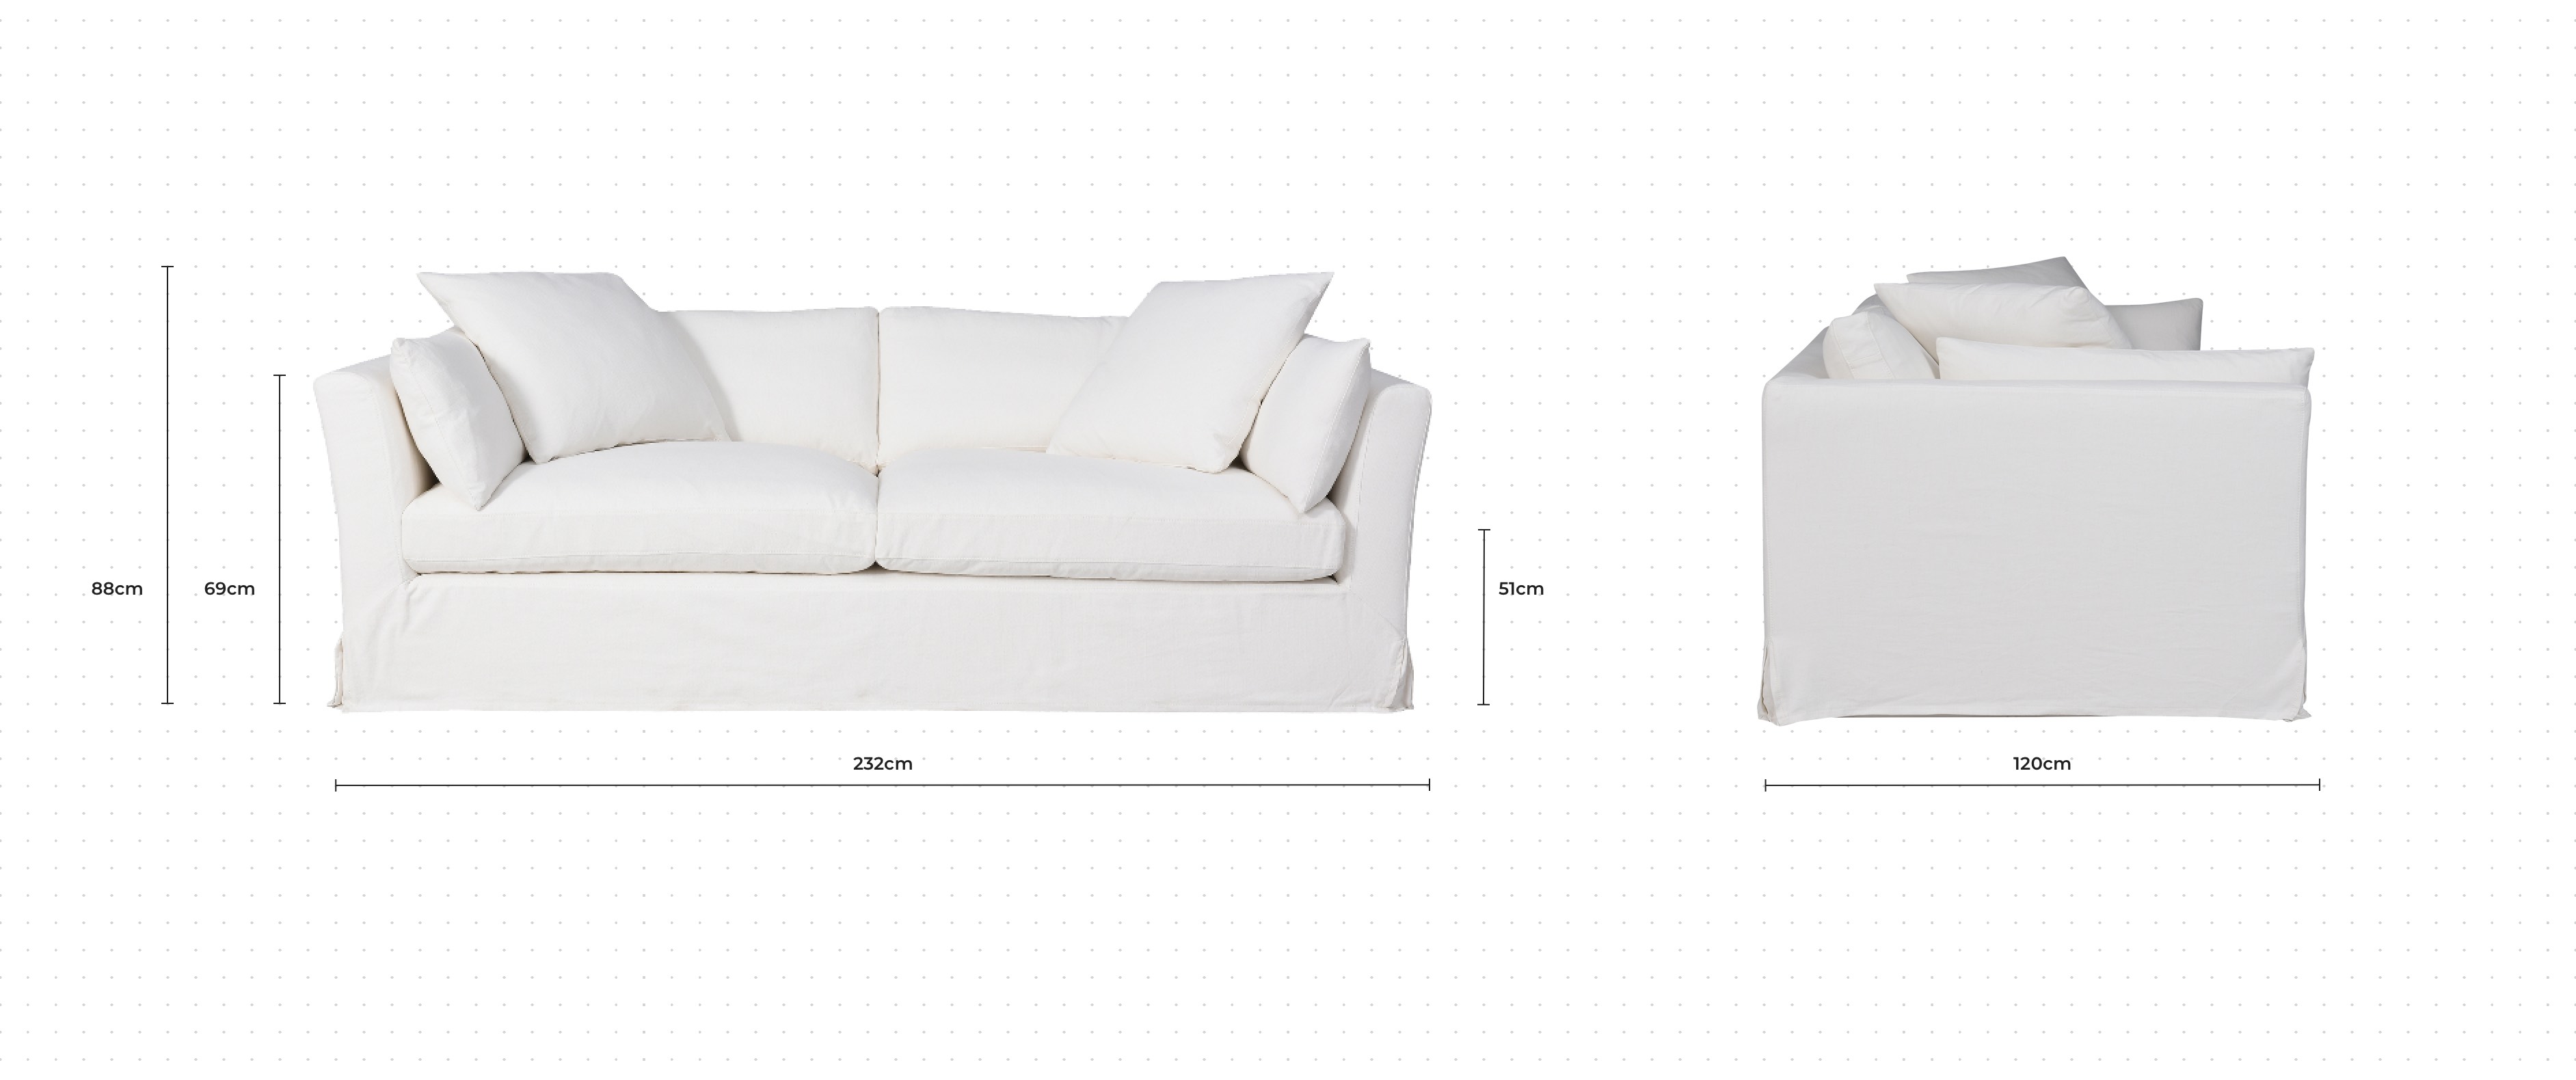 Tallis 3 Seater Sofa dimensions